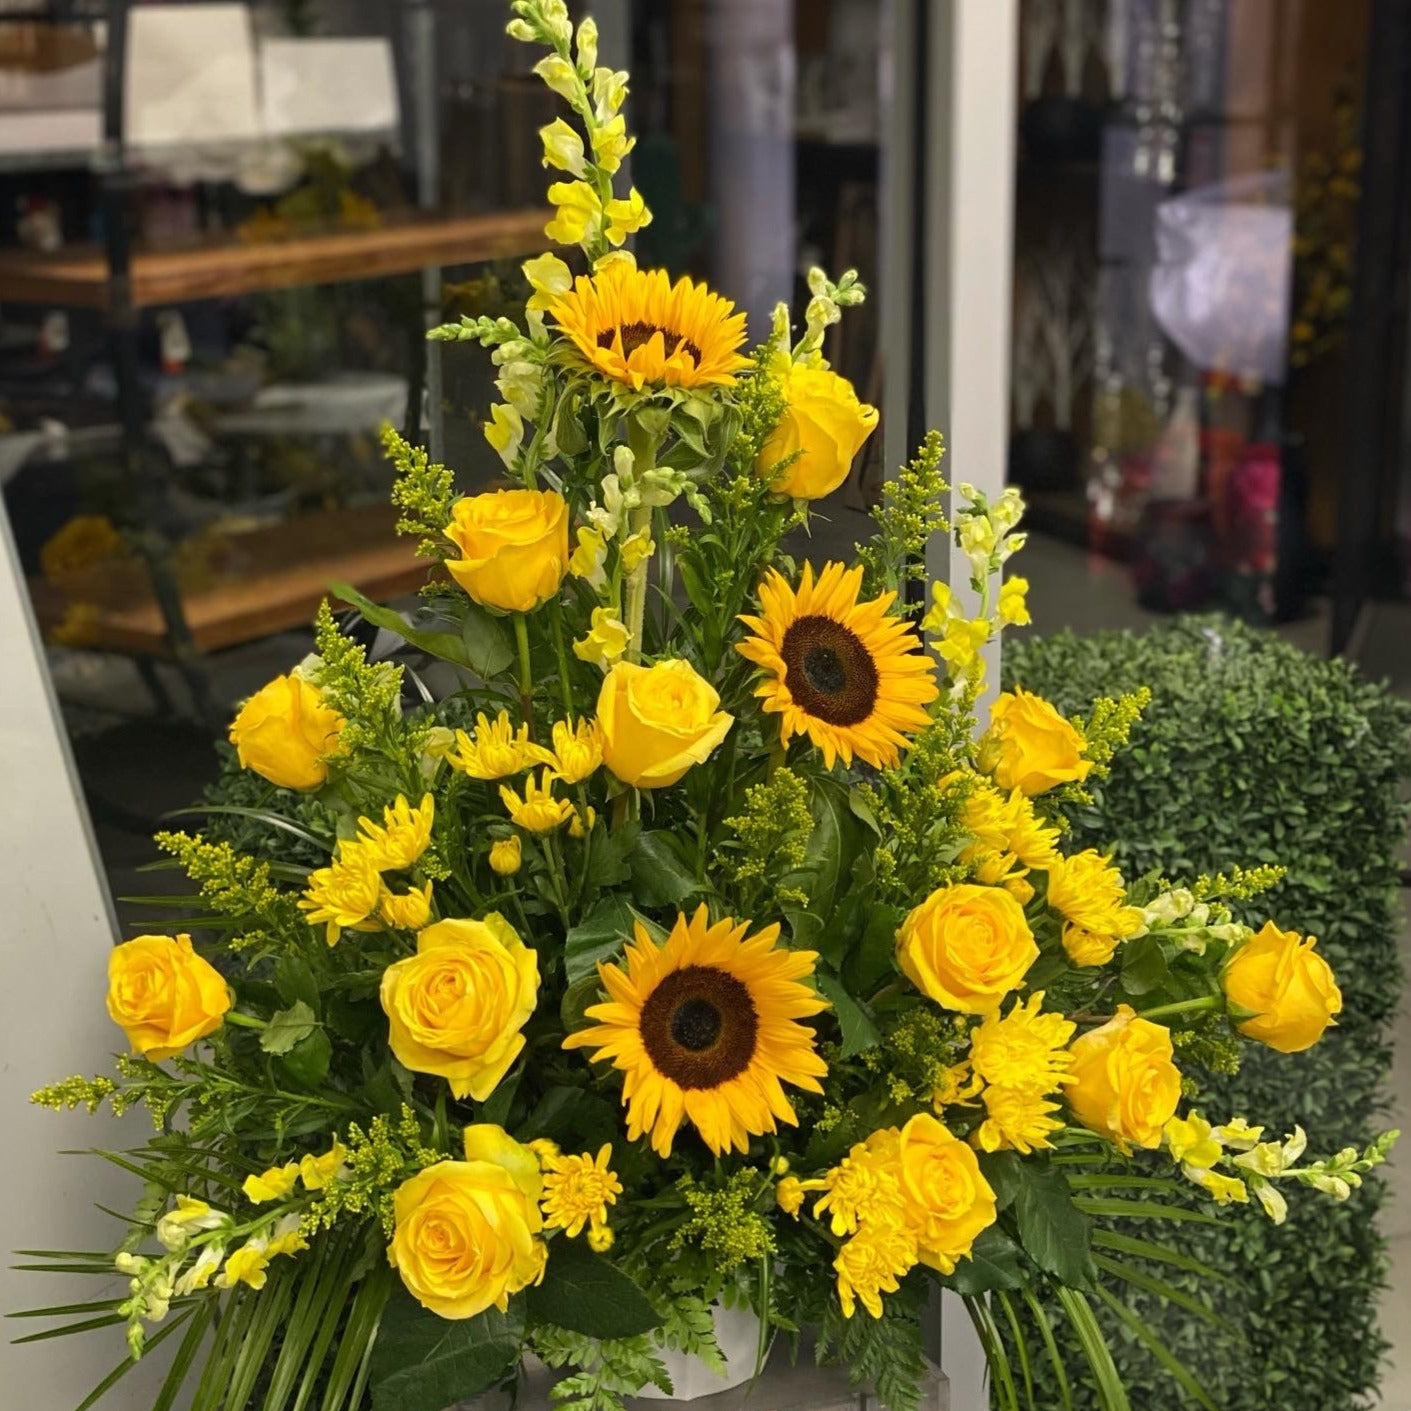 Sunshine & Sunflowers